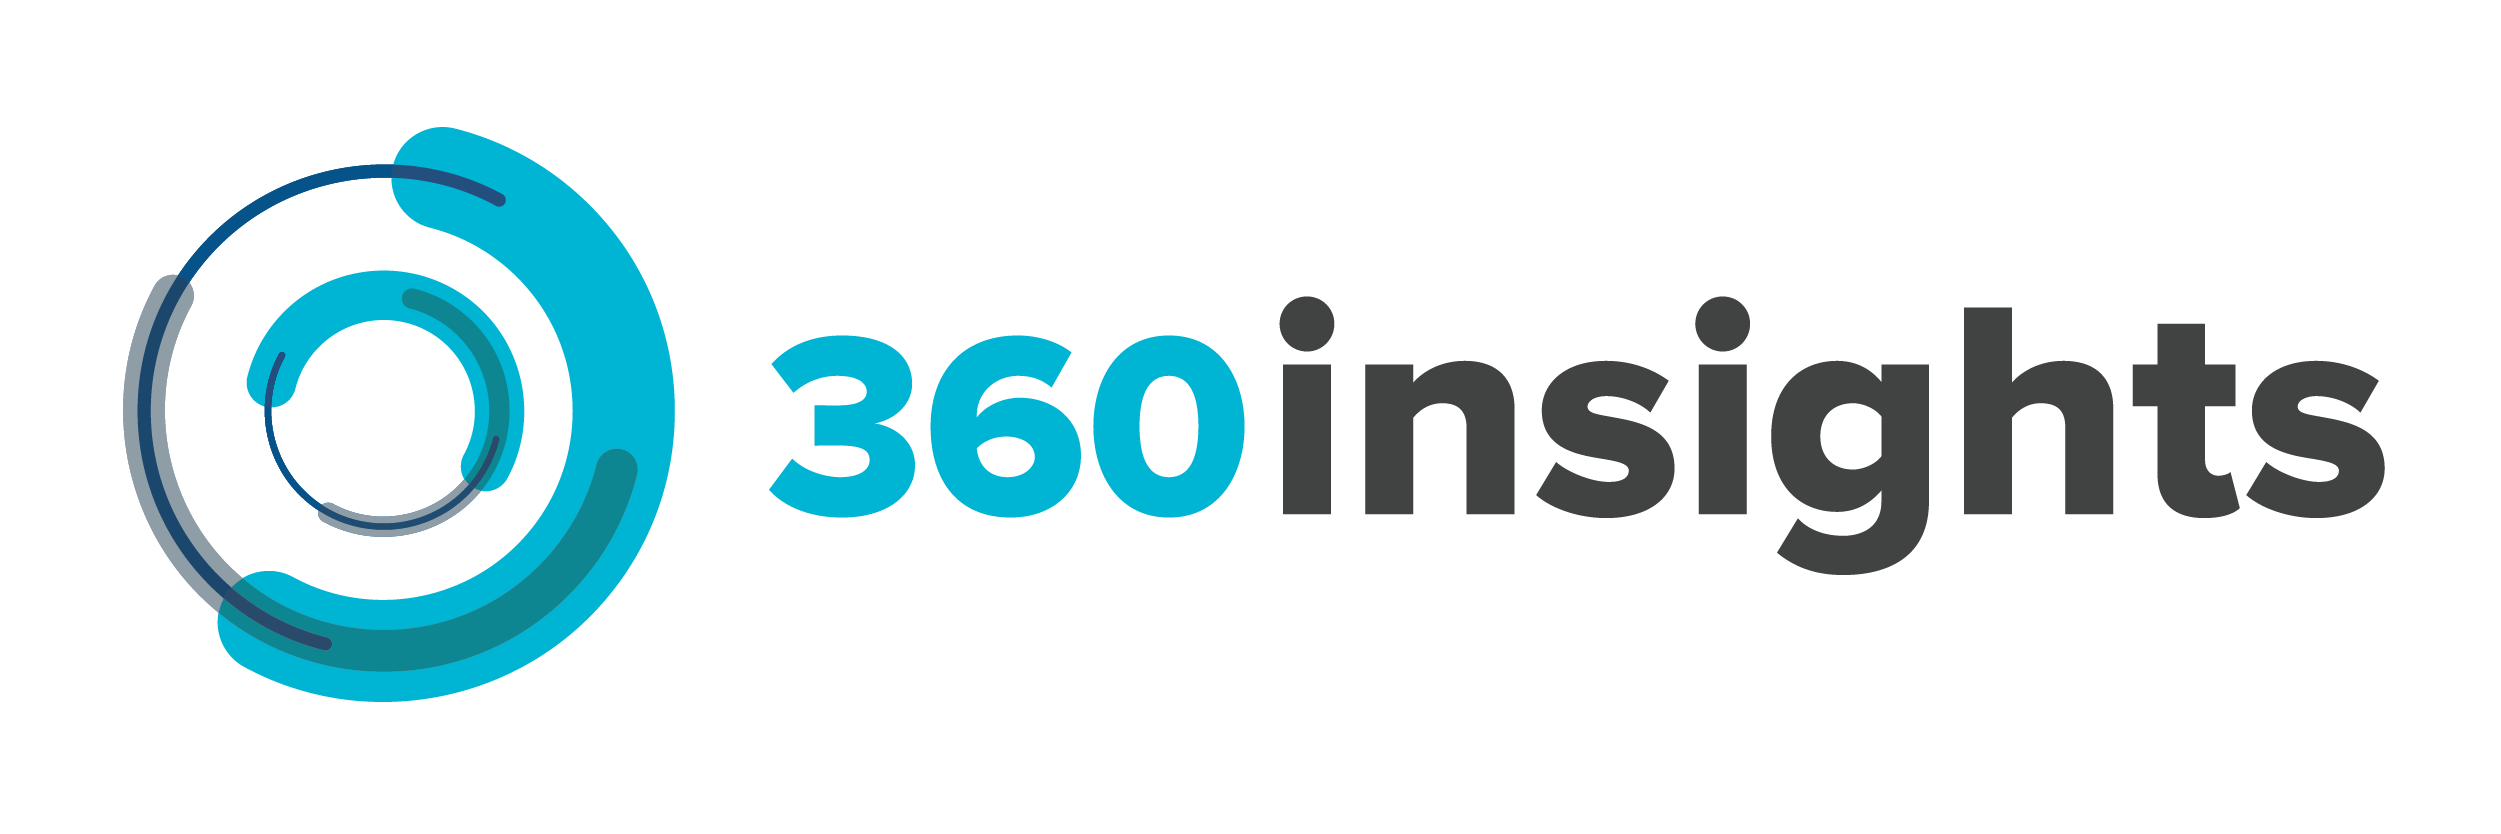 360insights (Canada) Ltd.